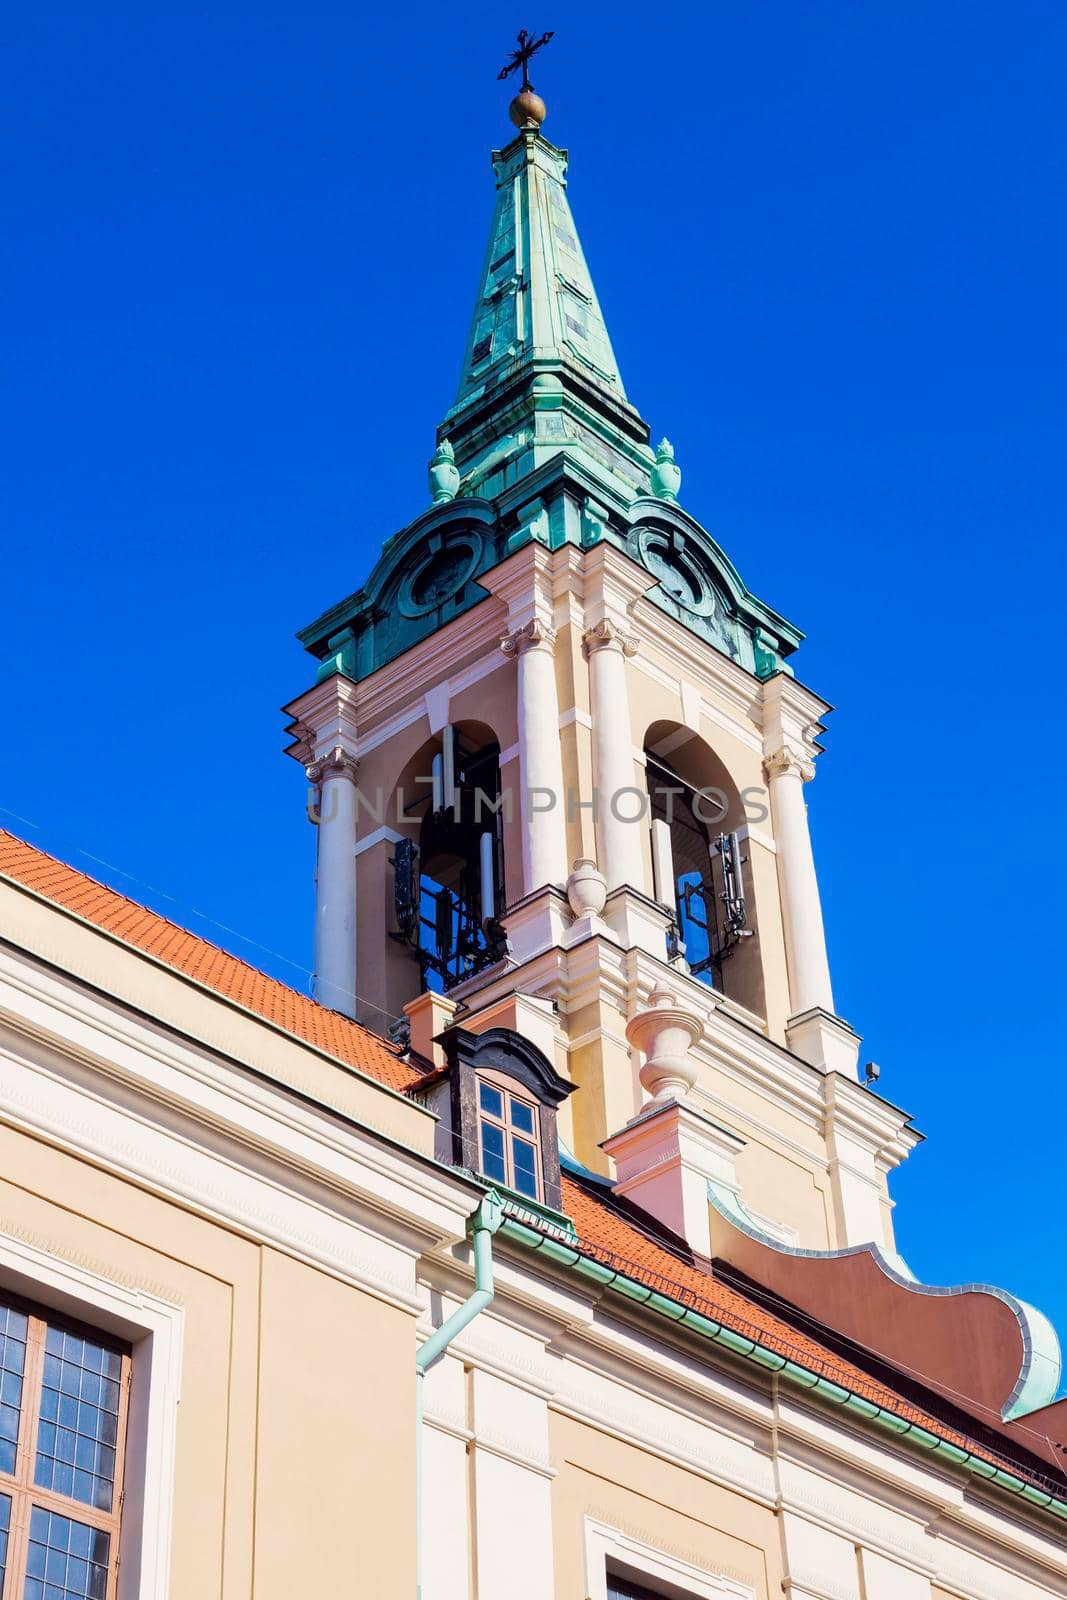 Holy Spirit Church on Old Market Square in Torun. Torun, Kuyavian-Pomeranian, Poland.